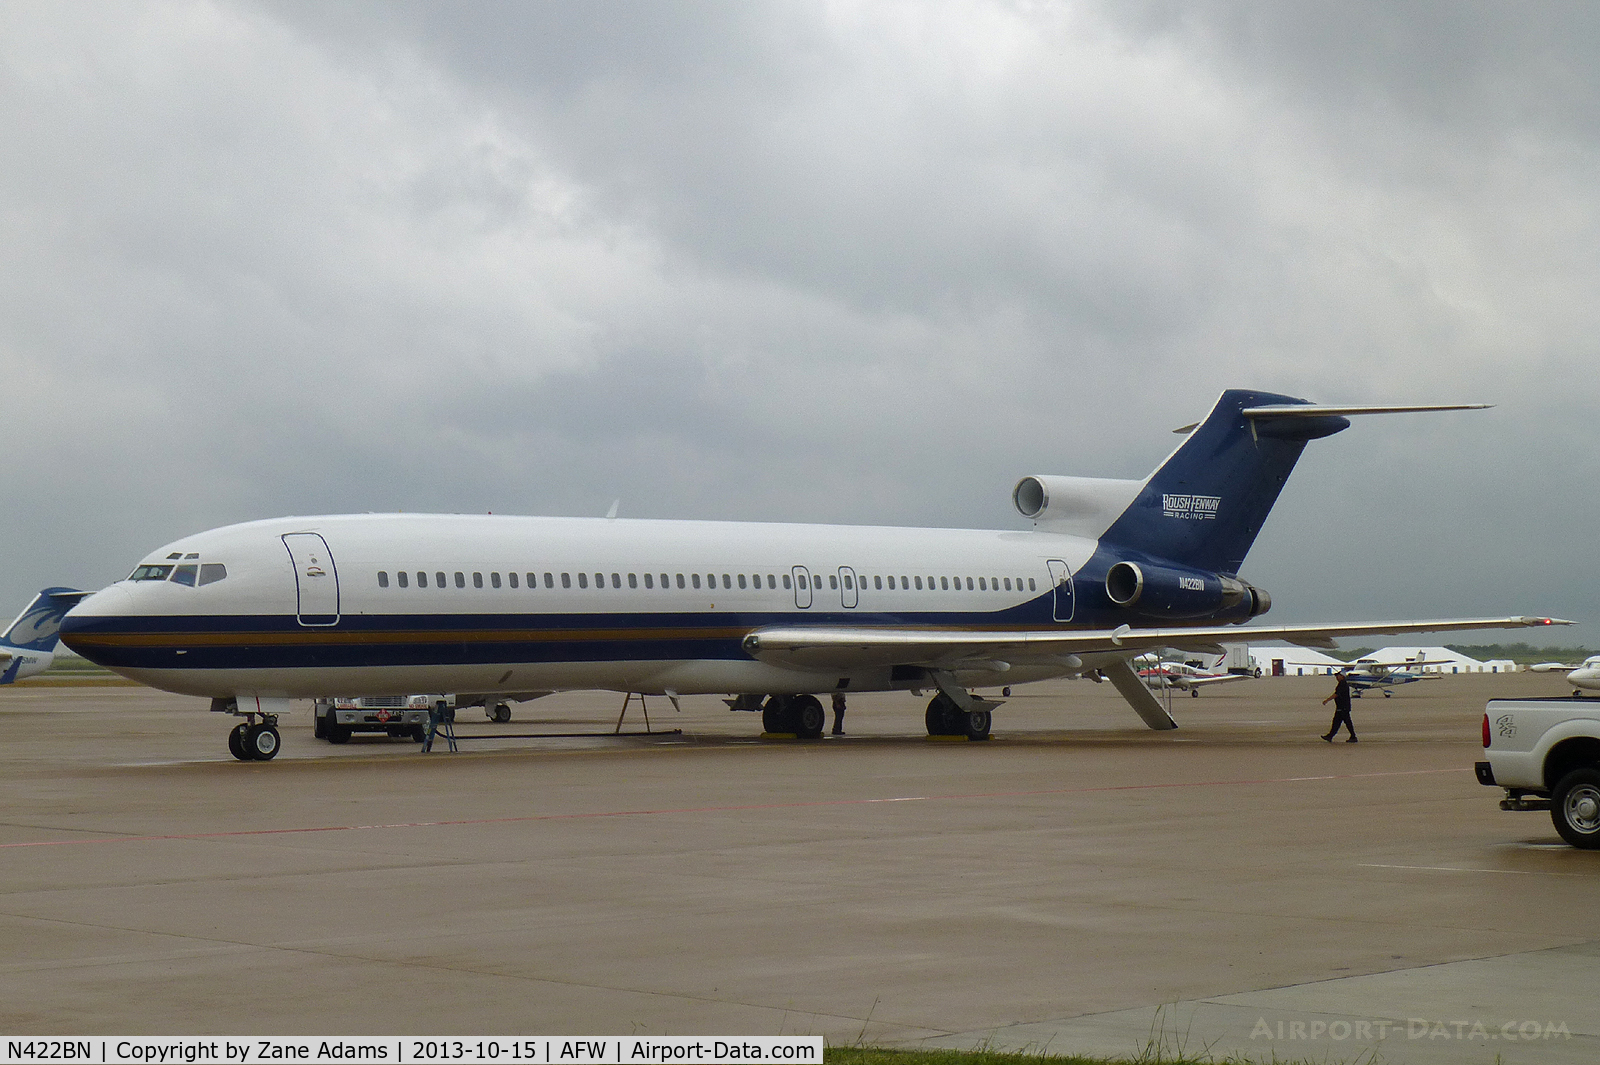 N422BN, 1973 Boeing 727-227 C/N 20735, Roush 727 at Alliance Airport - Fort Worth, TX